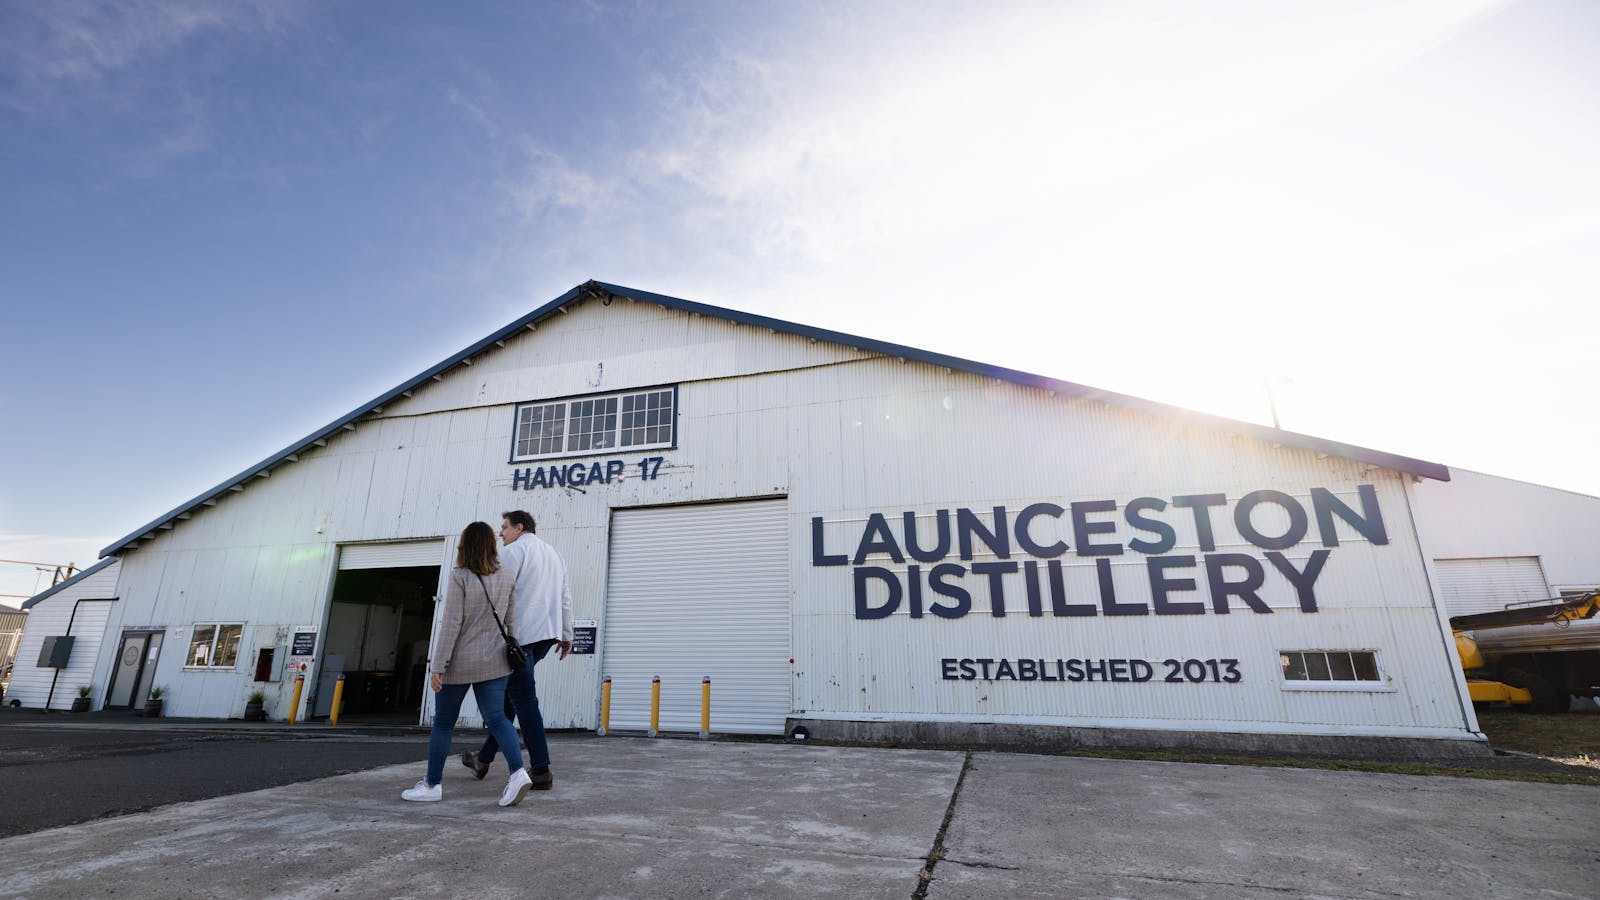 Launceston Distillery at Hangar 17